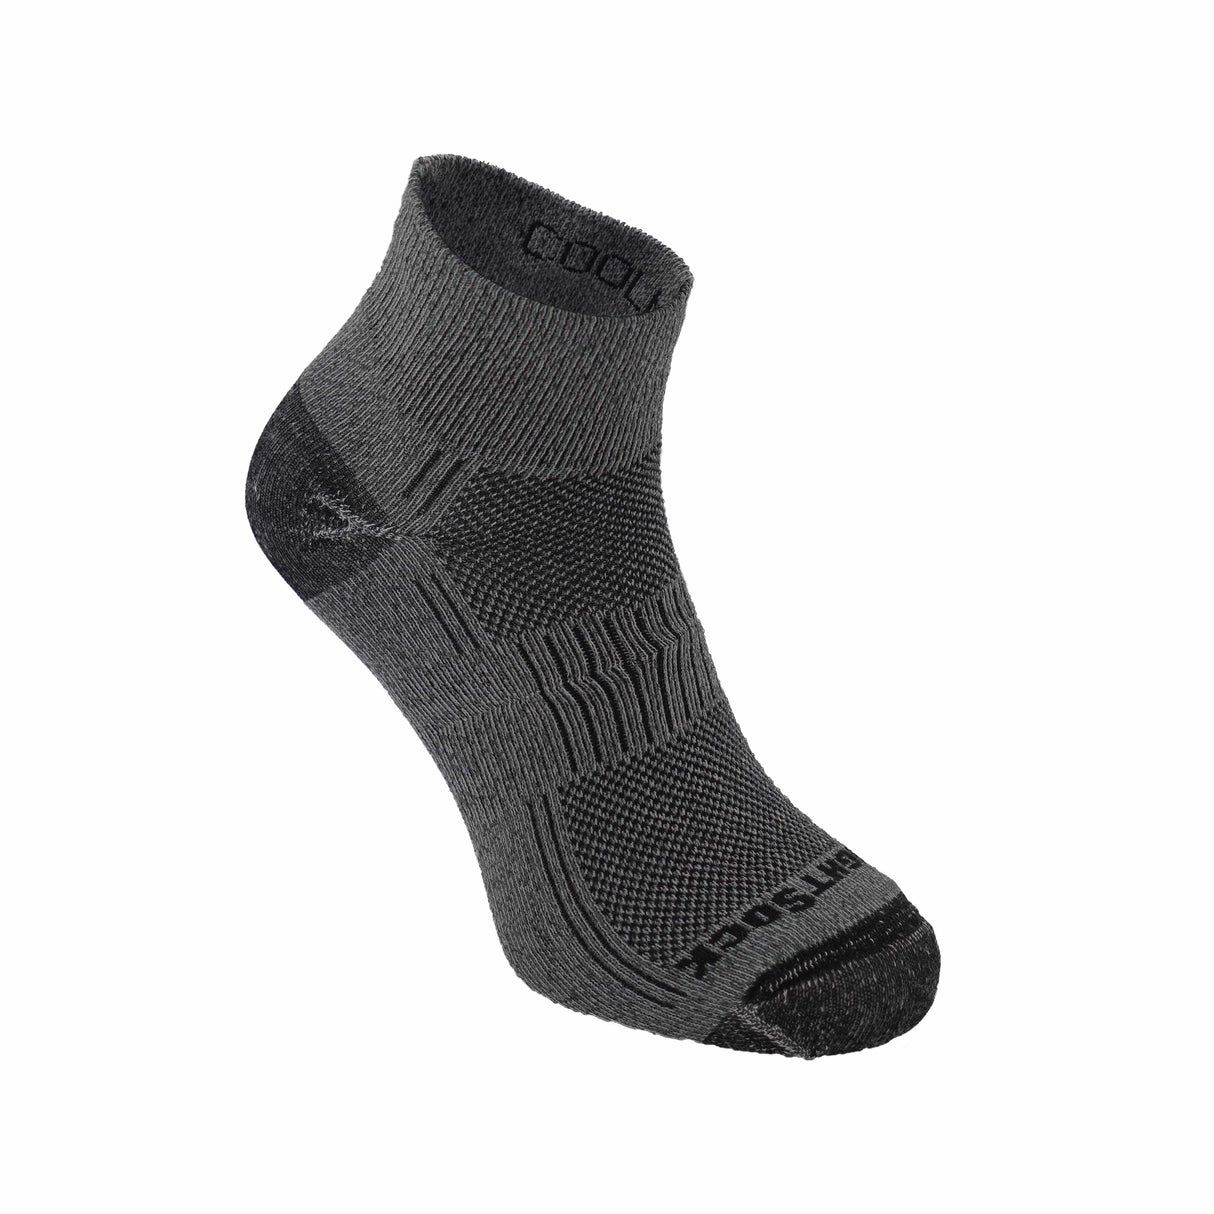 Wrightsock Coolmesh II Quarter Socks  -  Small / Ash Twist / Single Pair